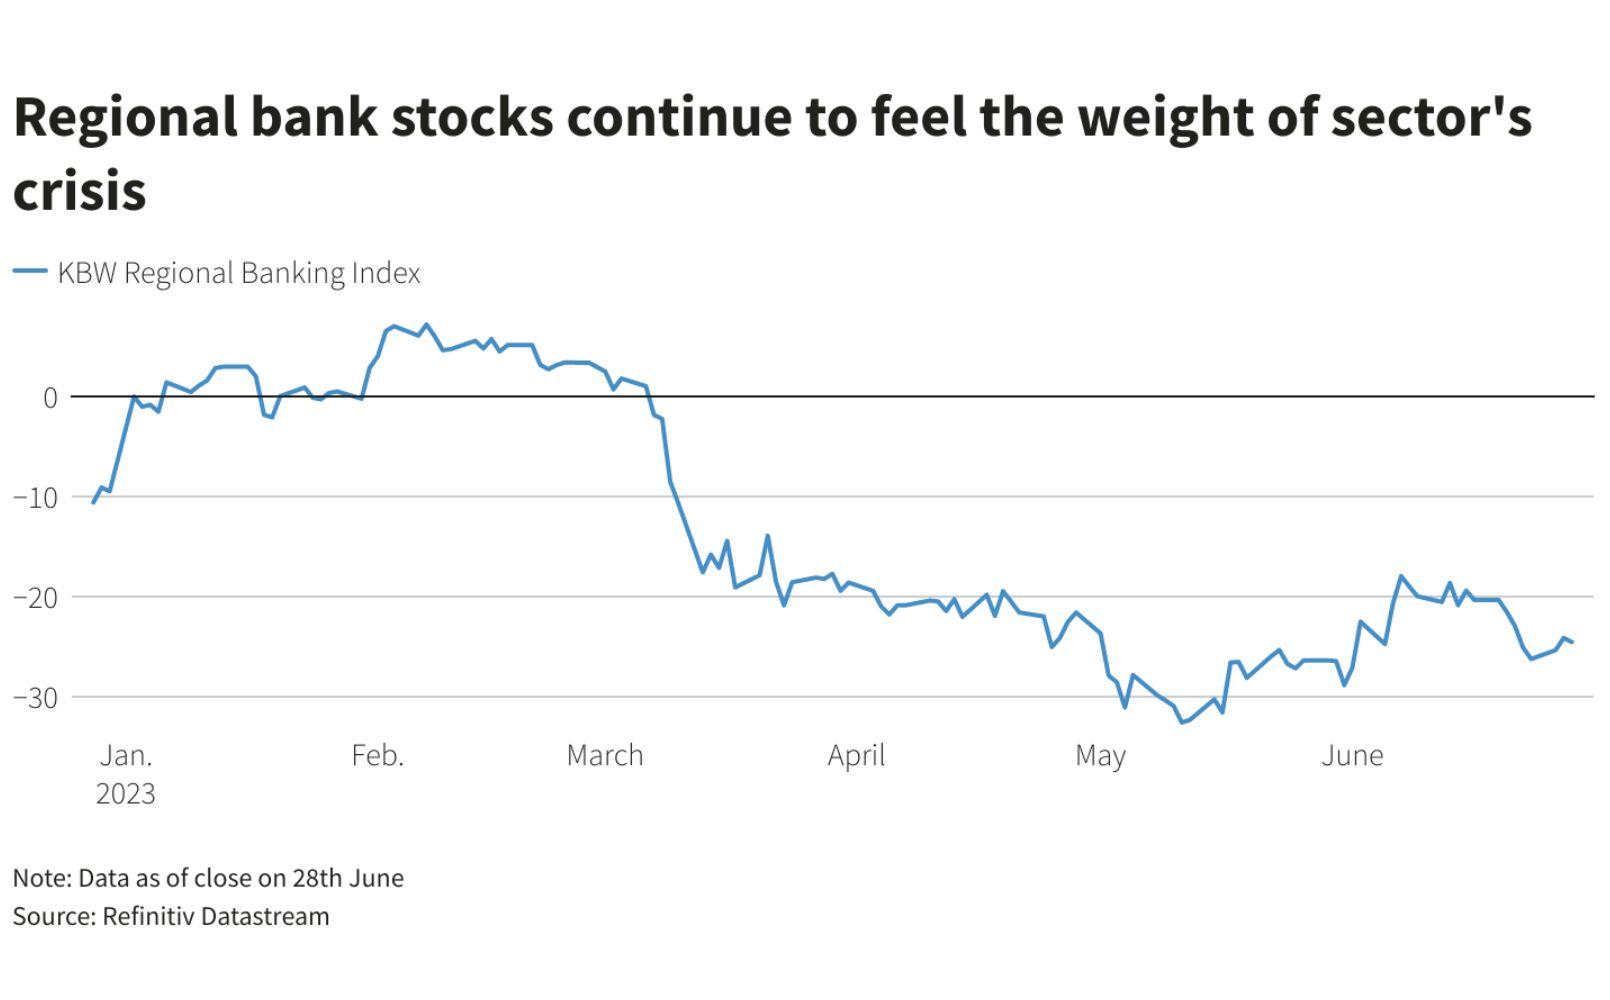 Regional bank stocks down